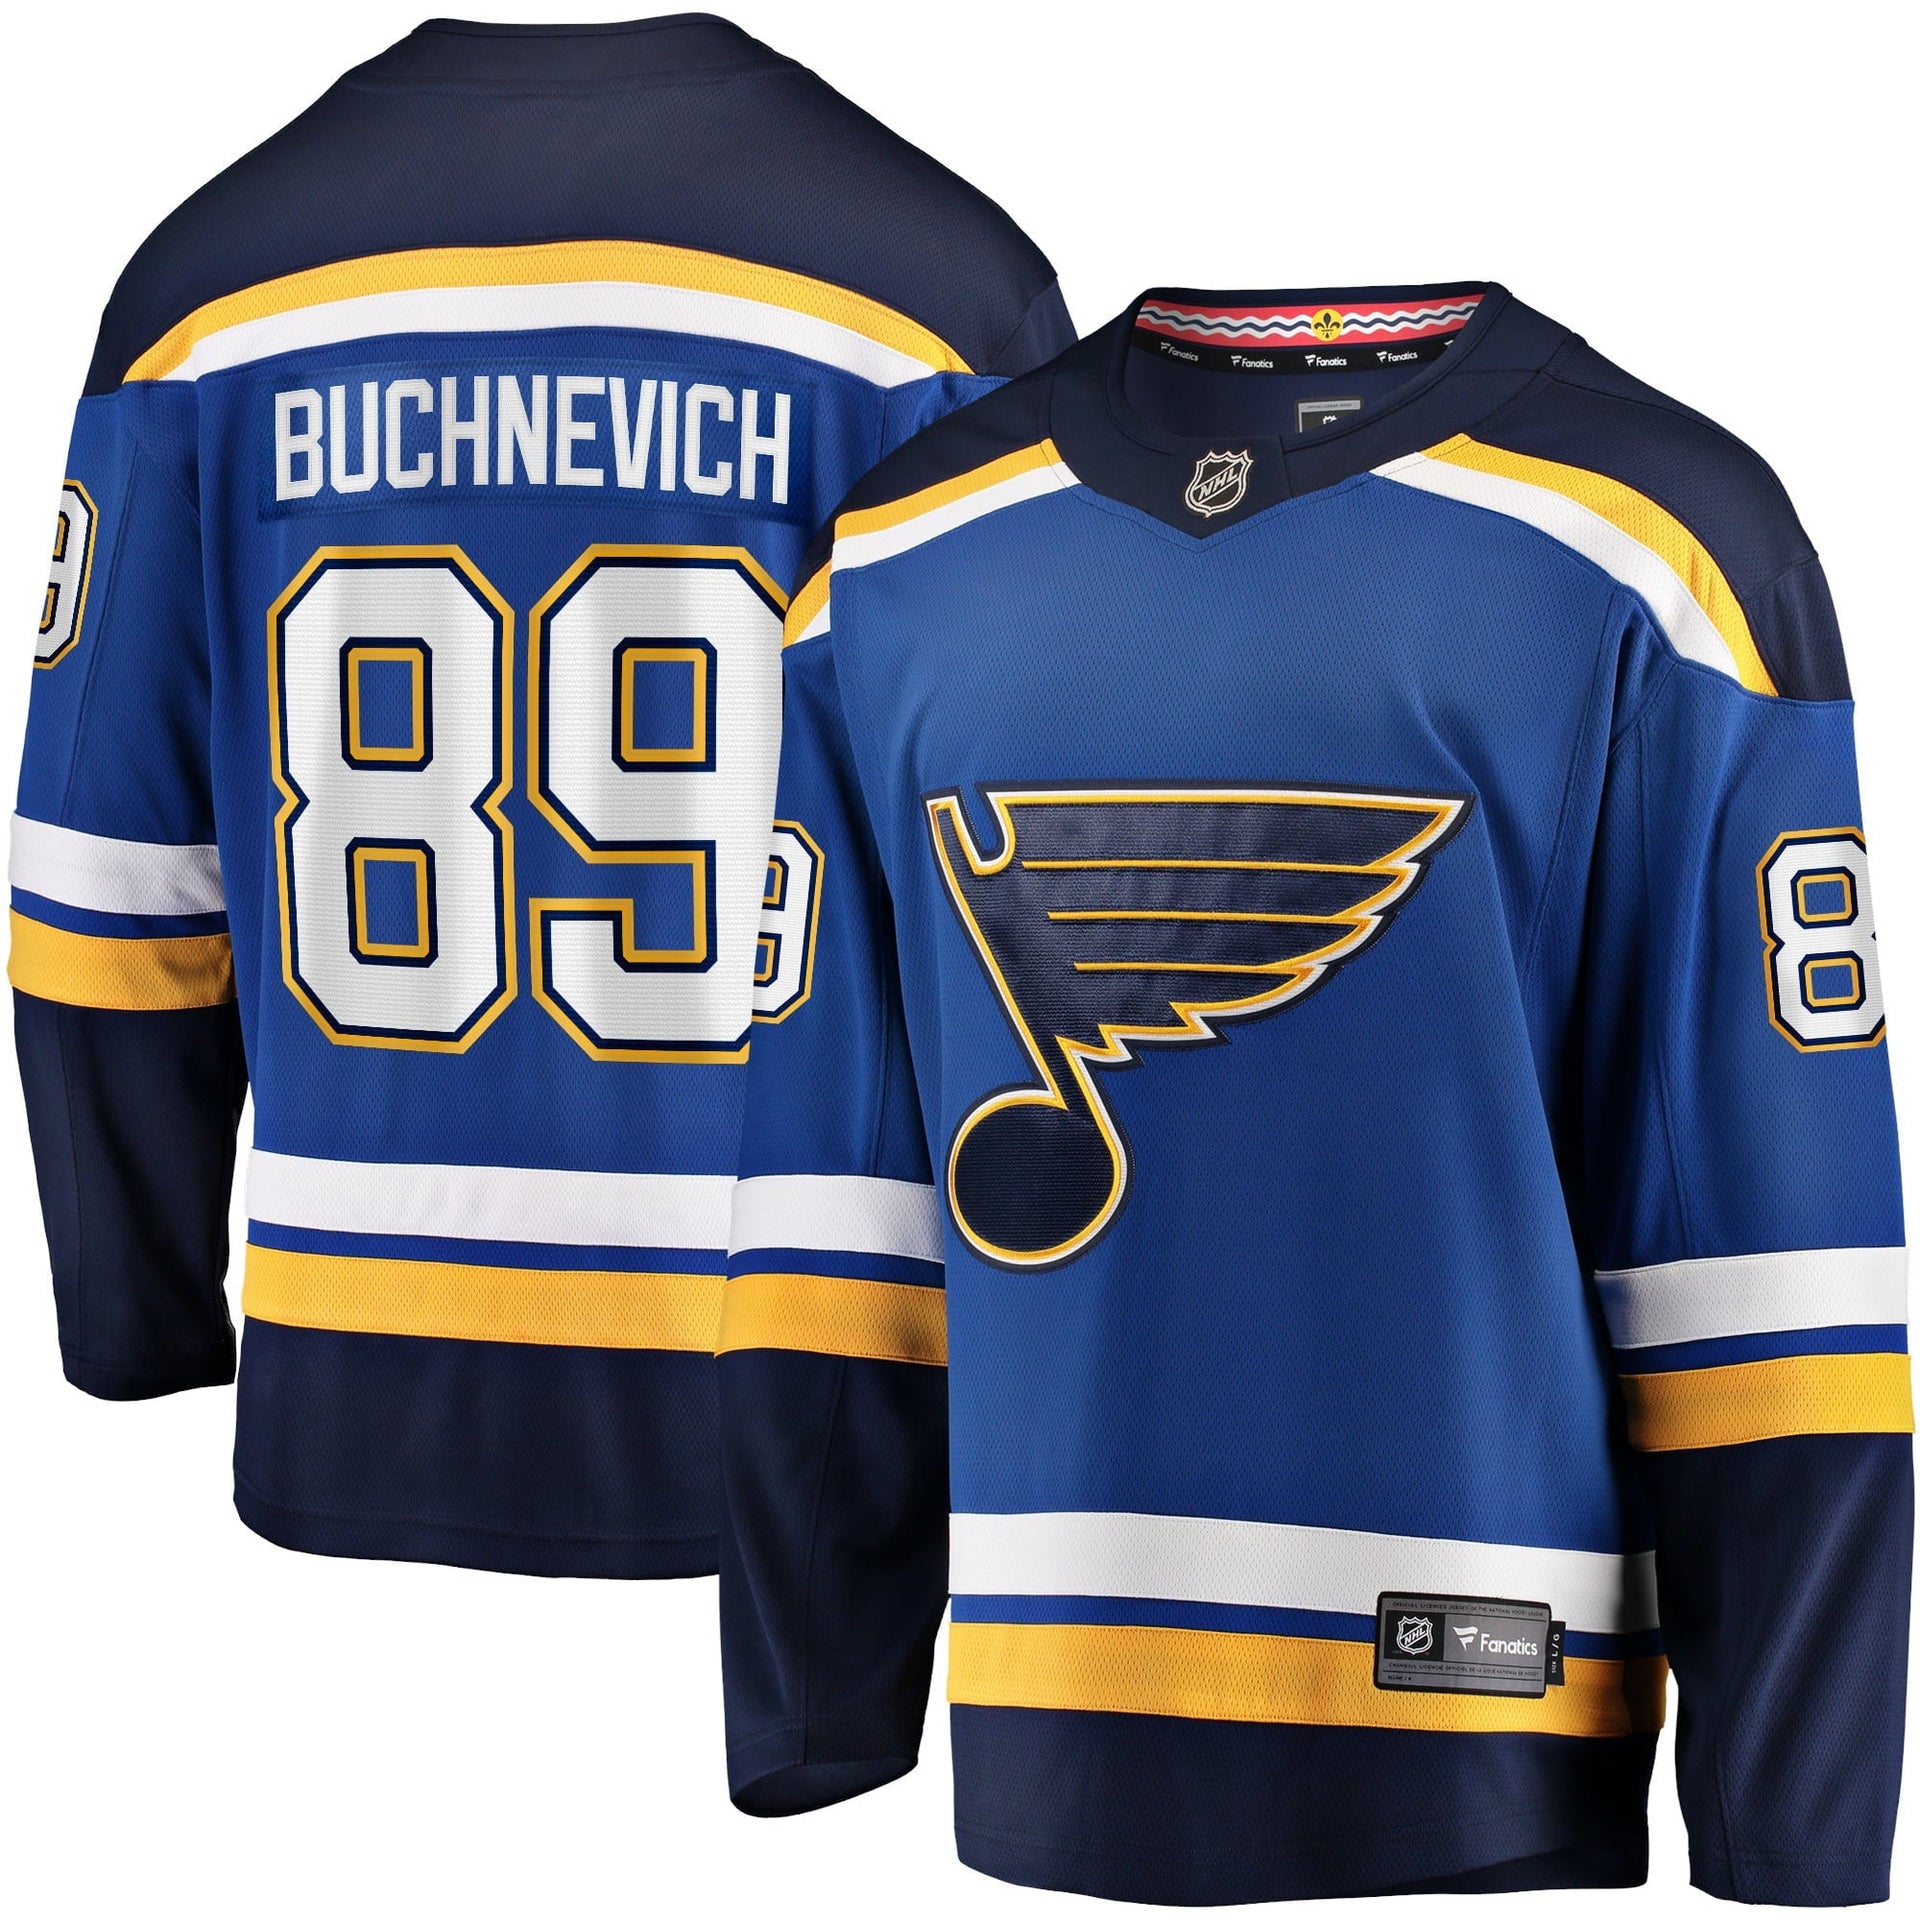 Pavel Buchnevich Jerseys, Pavel Buchnevich Shirts, Apparel, Gear